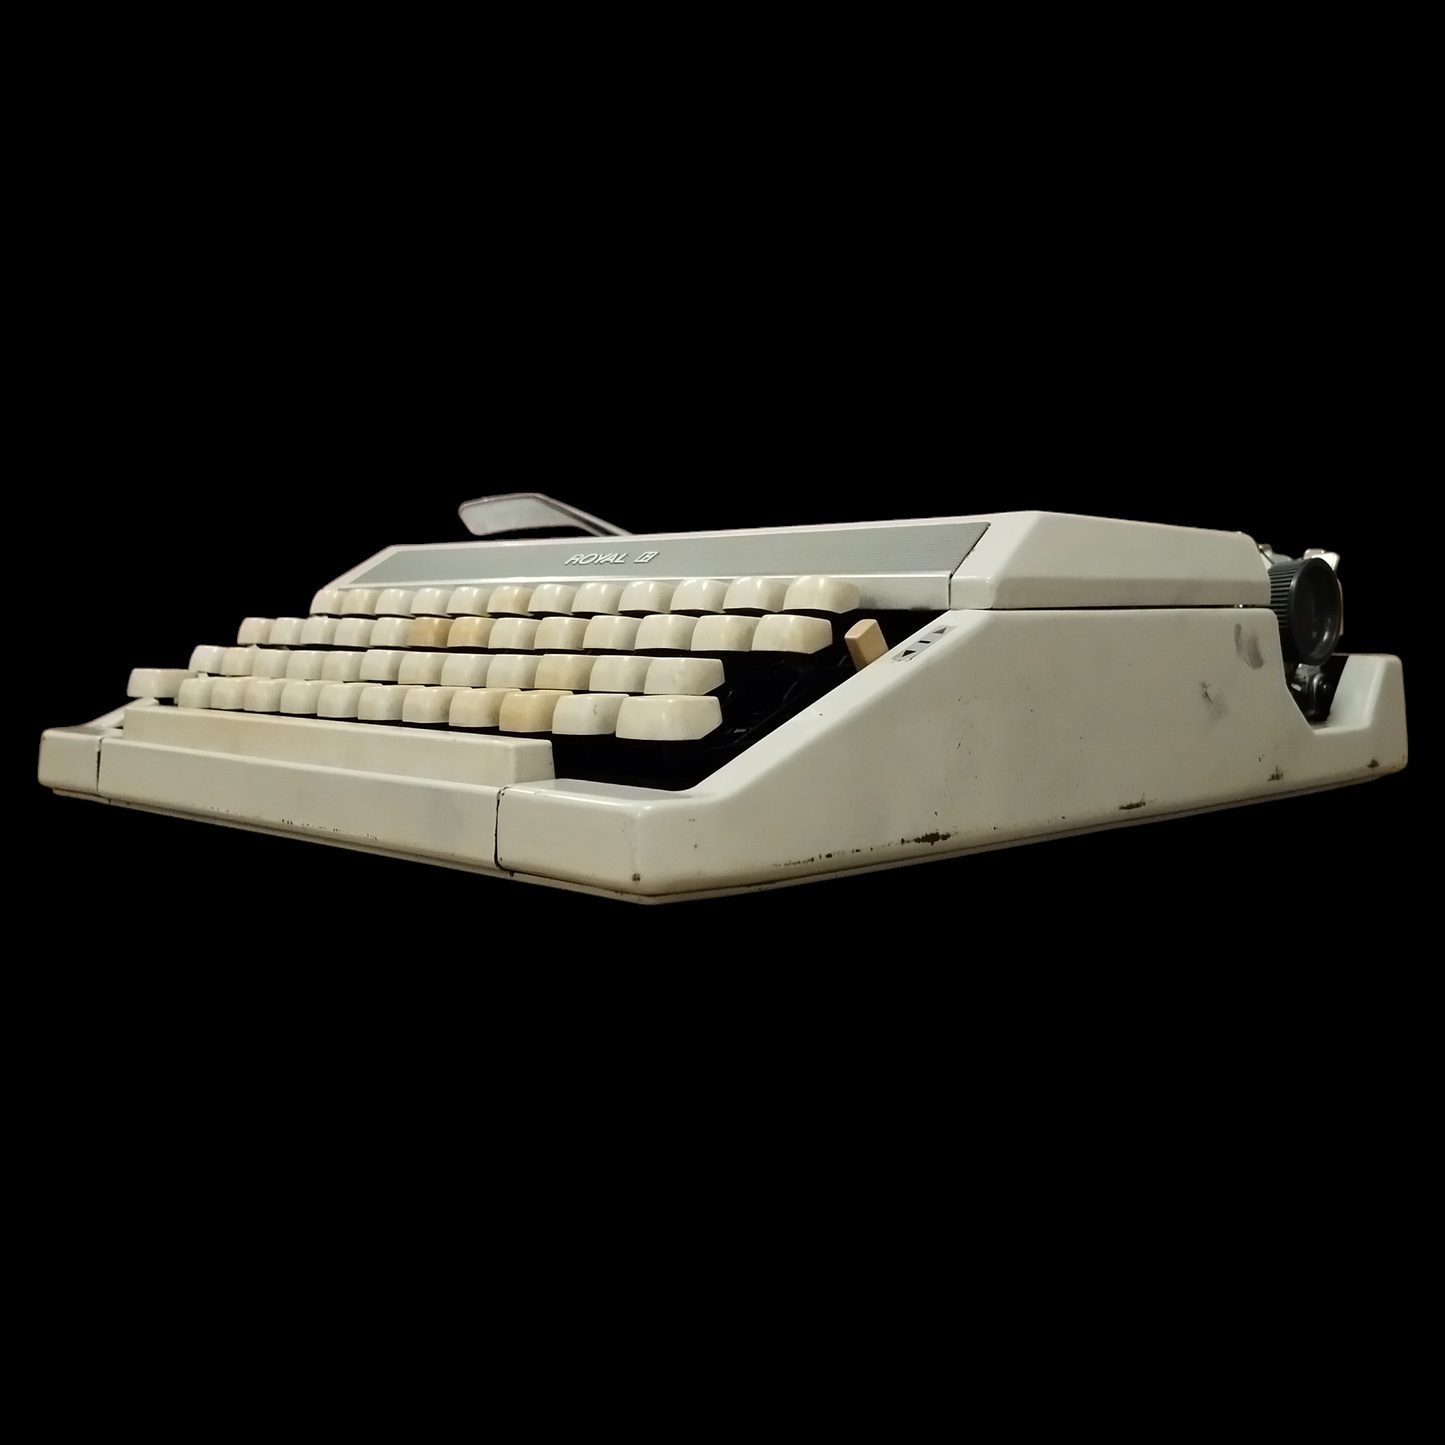 Image of Royal 200 Typewriter from universaltypewritercompany.in